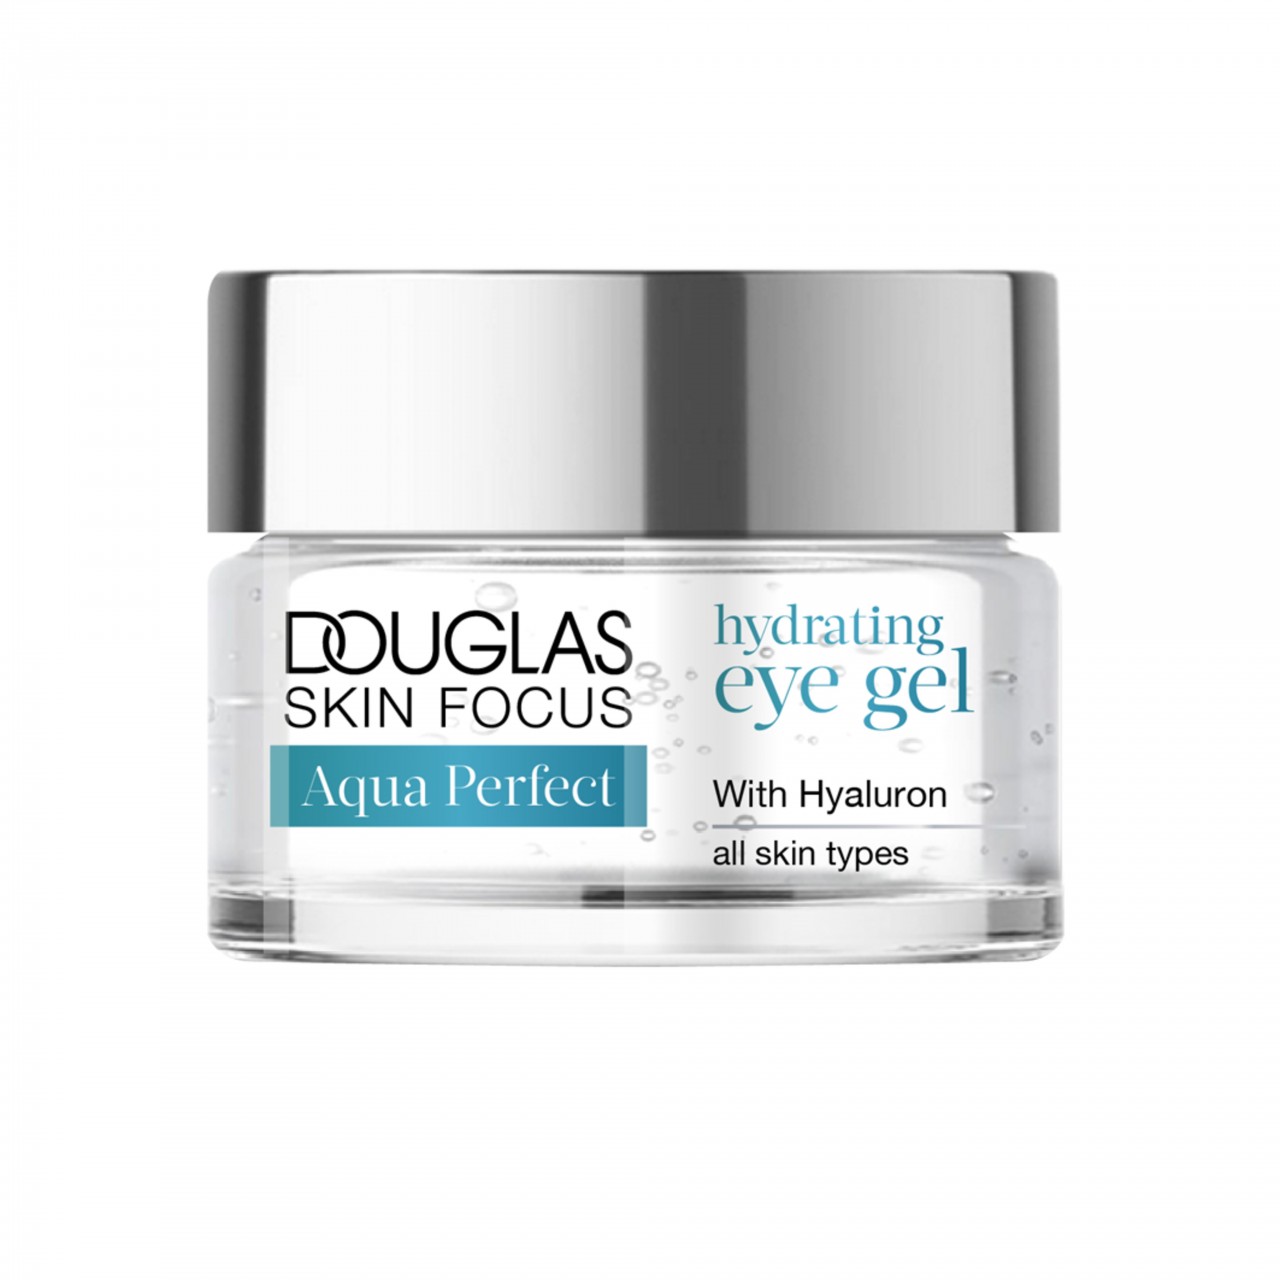 Douglas Skin Focus Hydrating Eye Gel